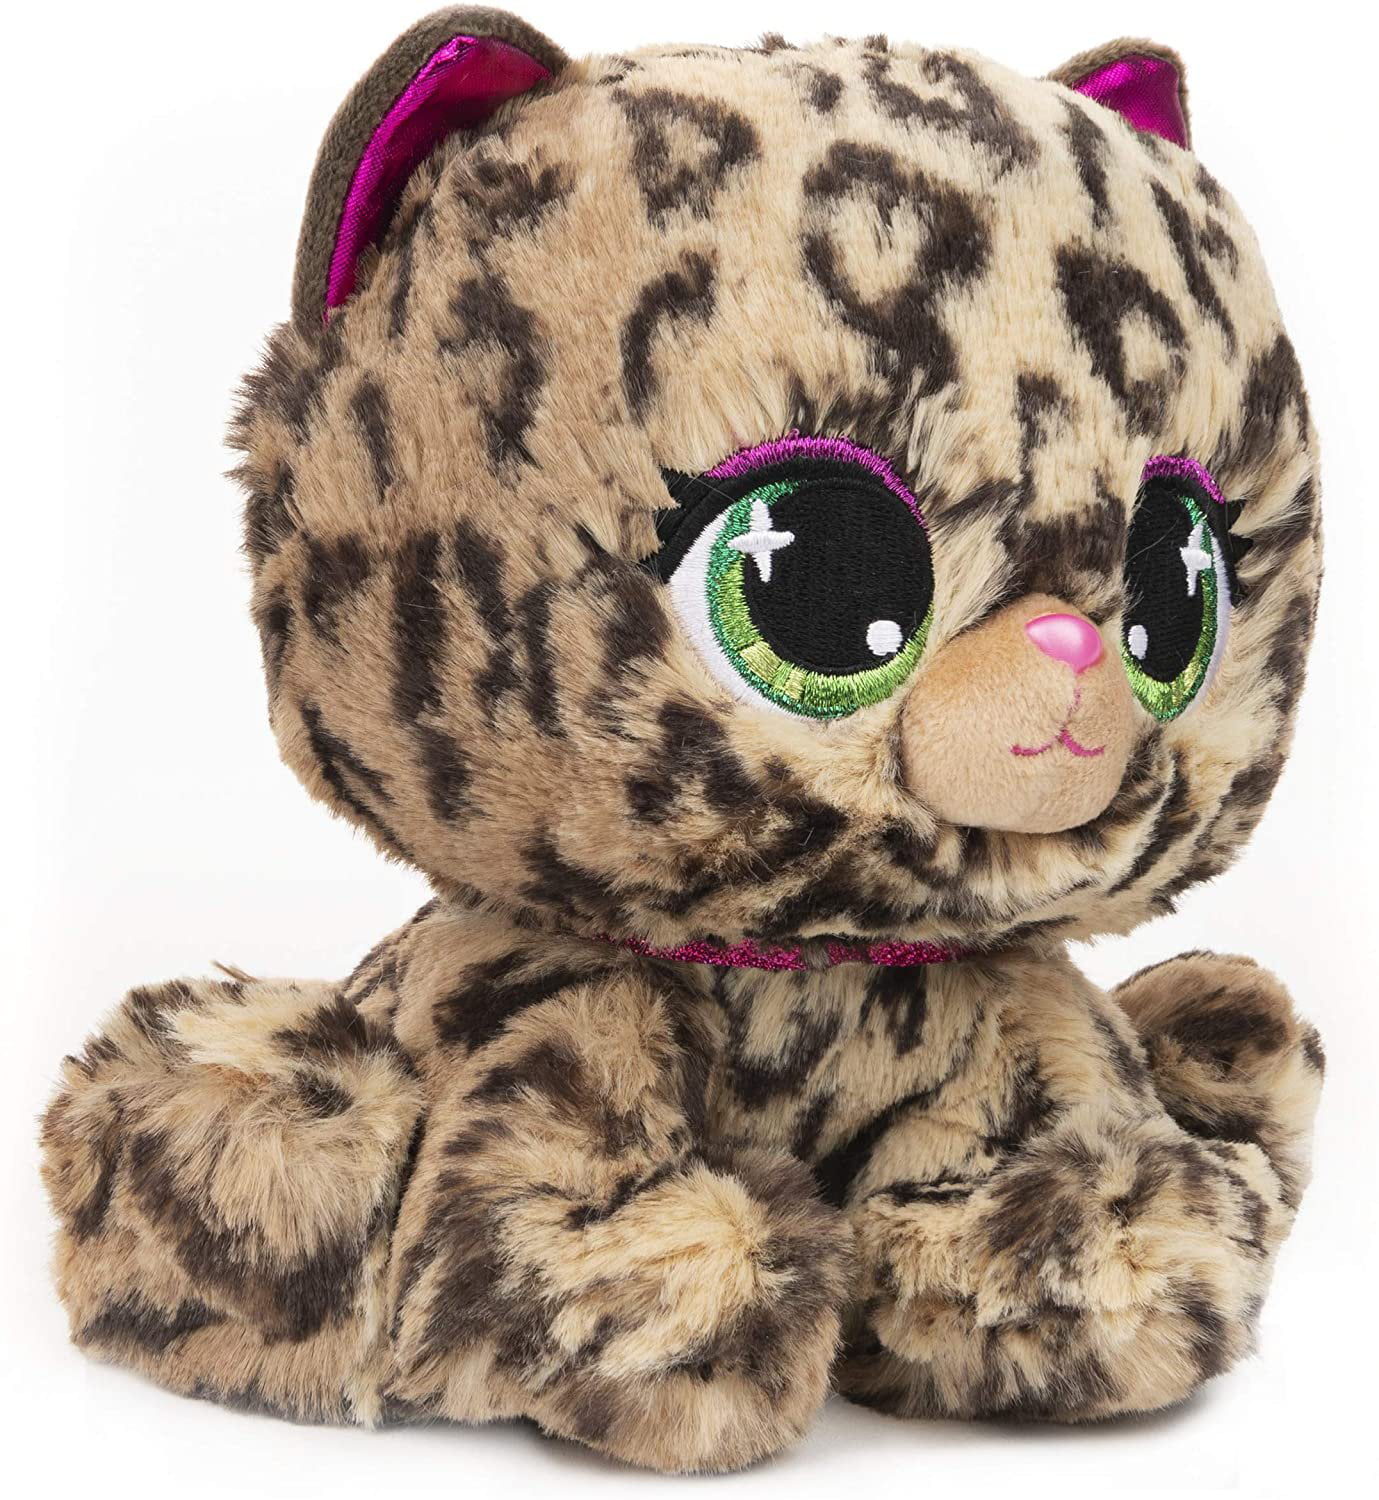 P.Lushes Designer Fashion Pets Limited-Edition 24kt Carti Snow Leopard  Premium Stuffed Animal Soft Plush, Gold Metallic, 6”